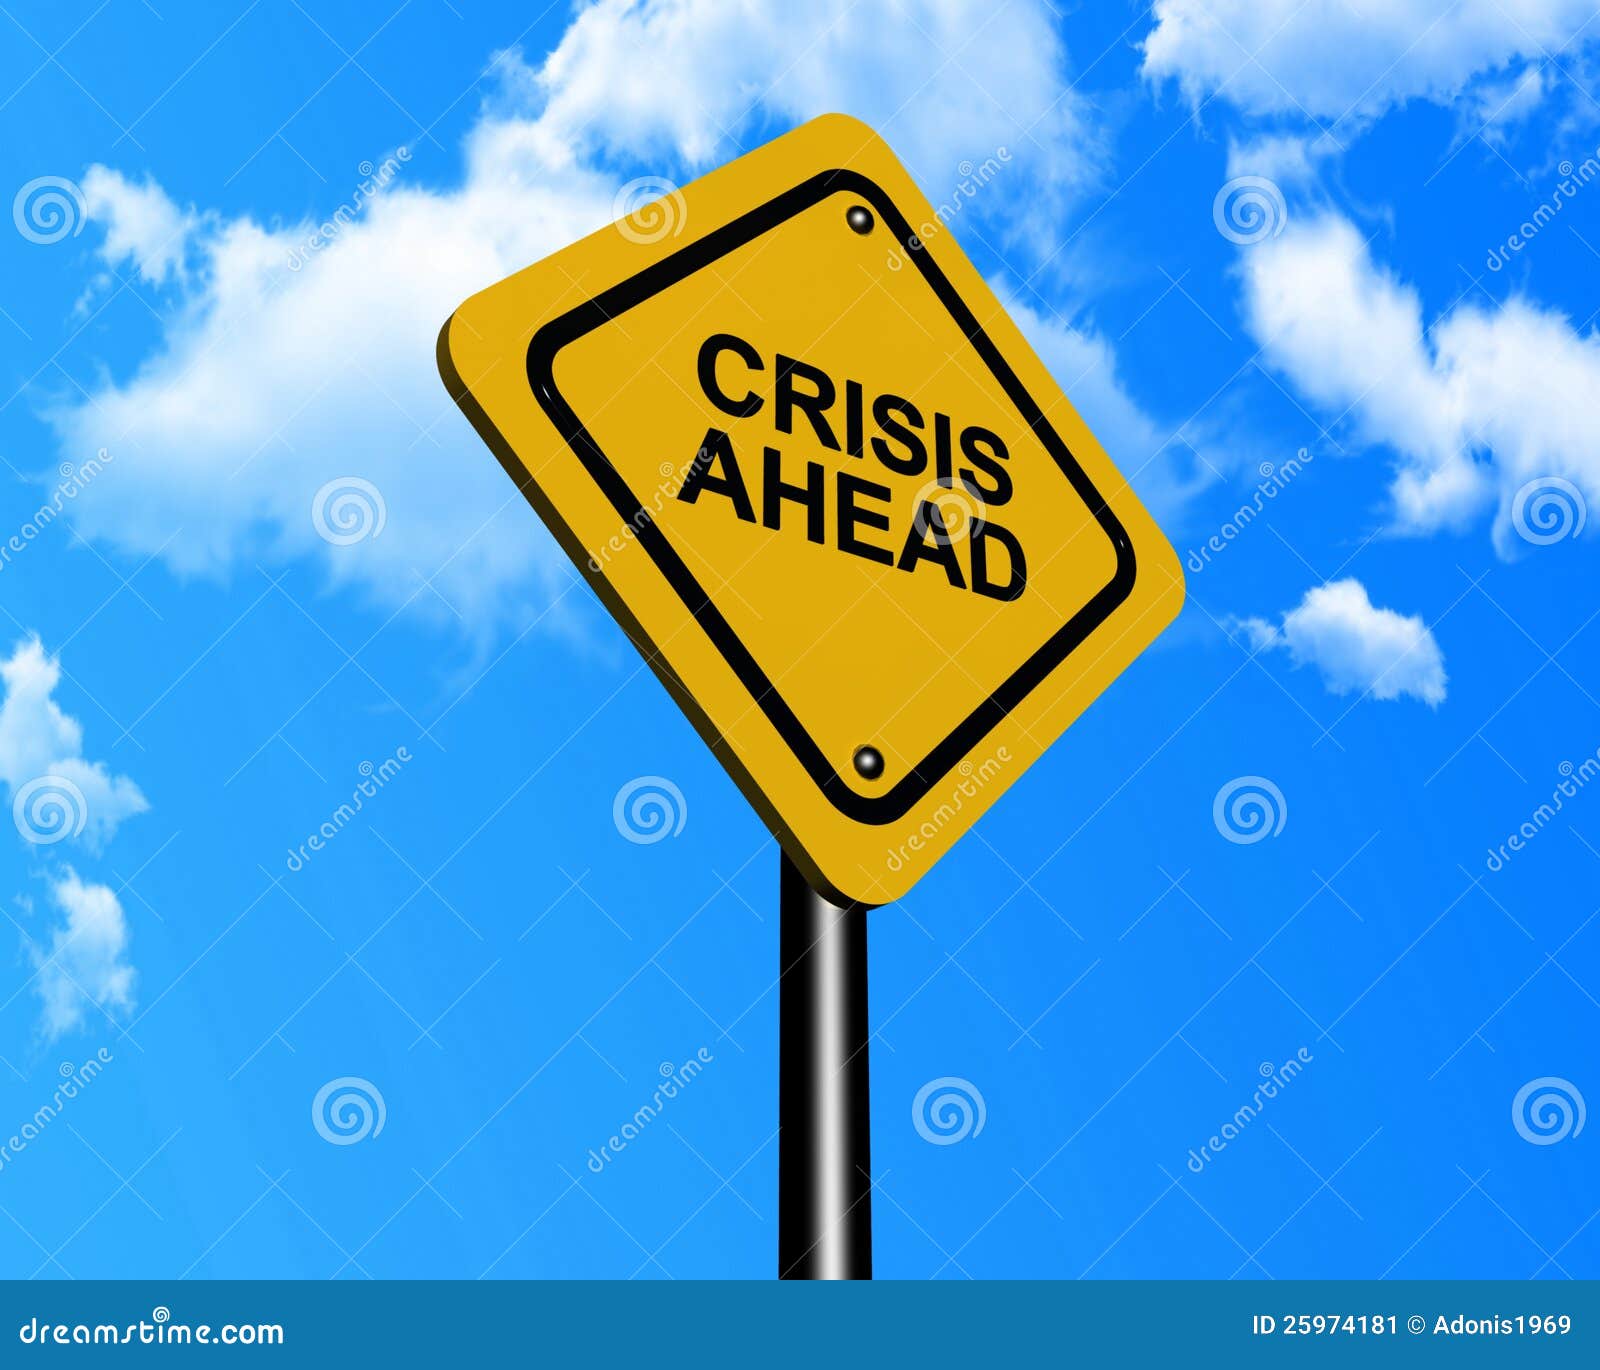 crisis ahead sign